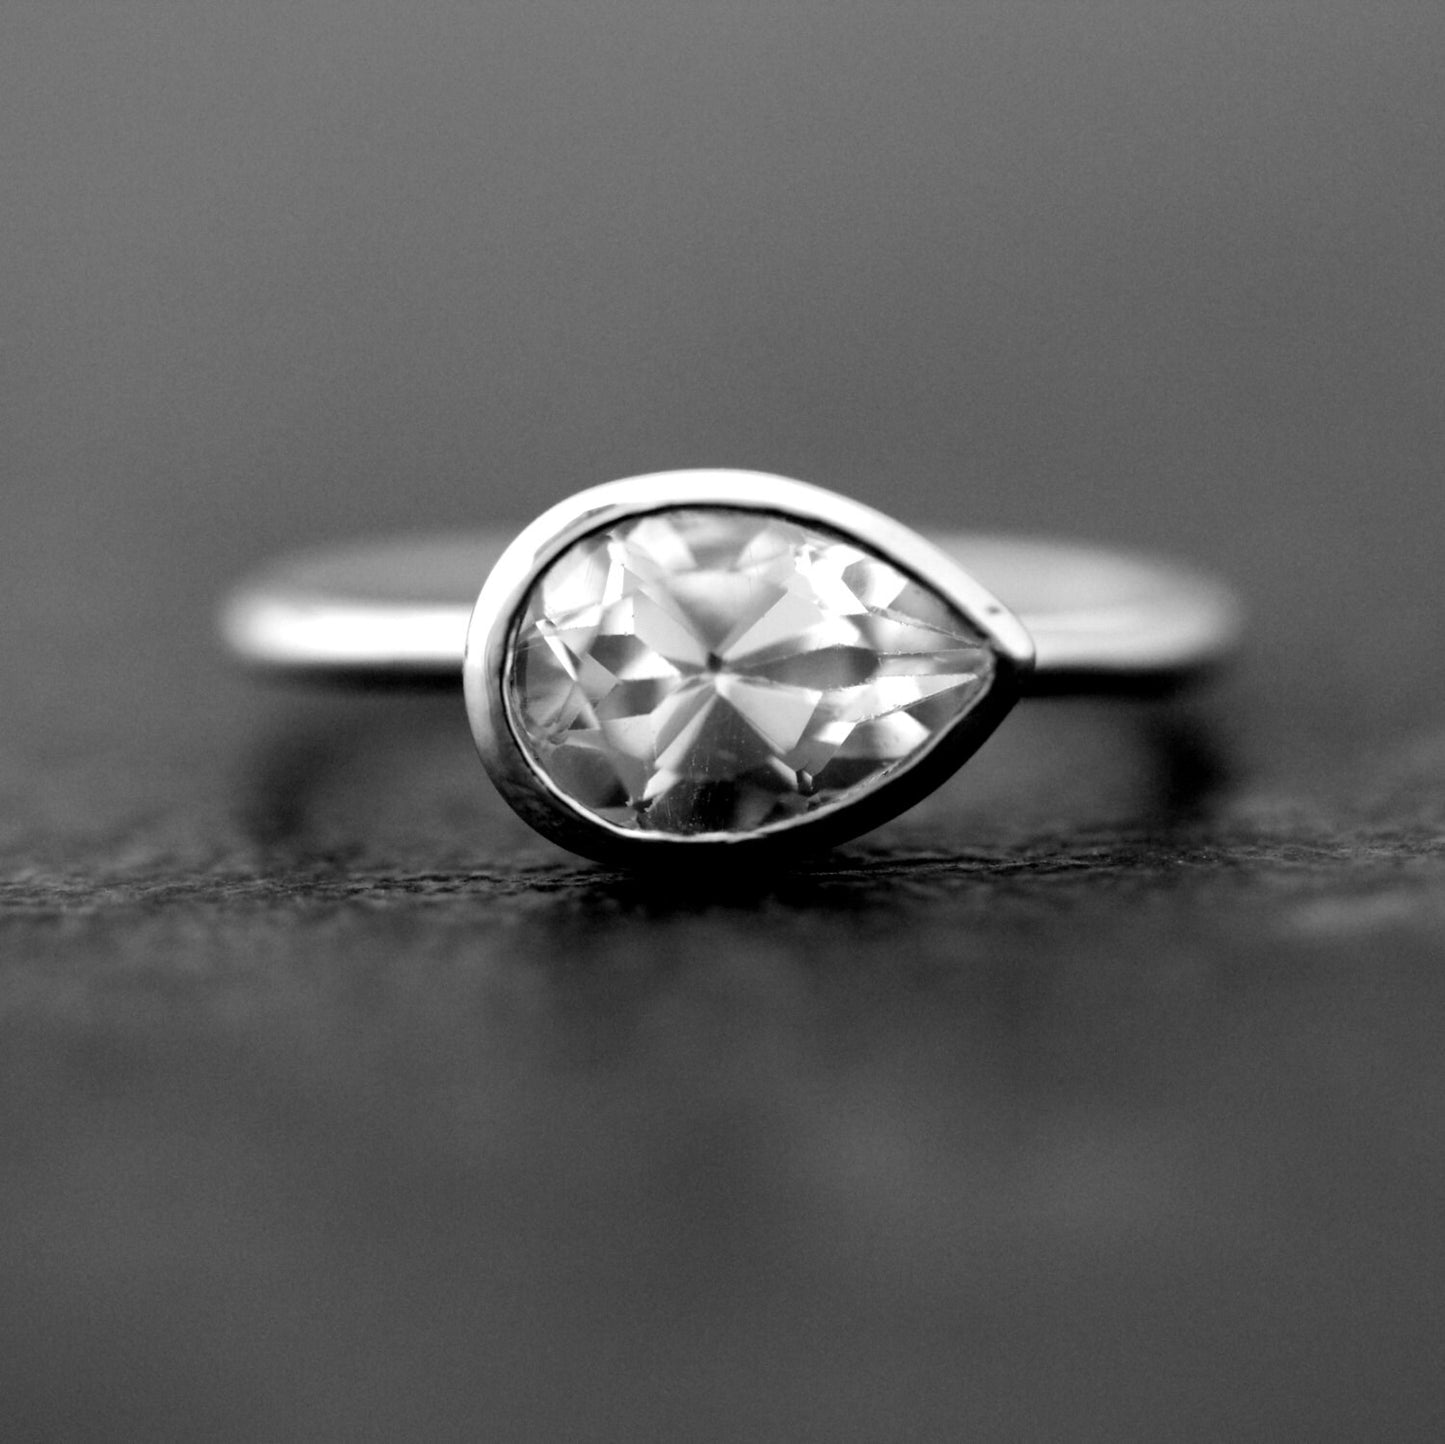 Handmade jewelry featuring a Sideways White Topaz Pear Shape Gemstone Ring in Sterling Silver Bezel by Cassin Jewelry.